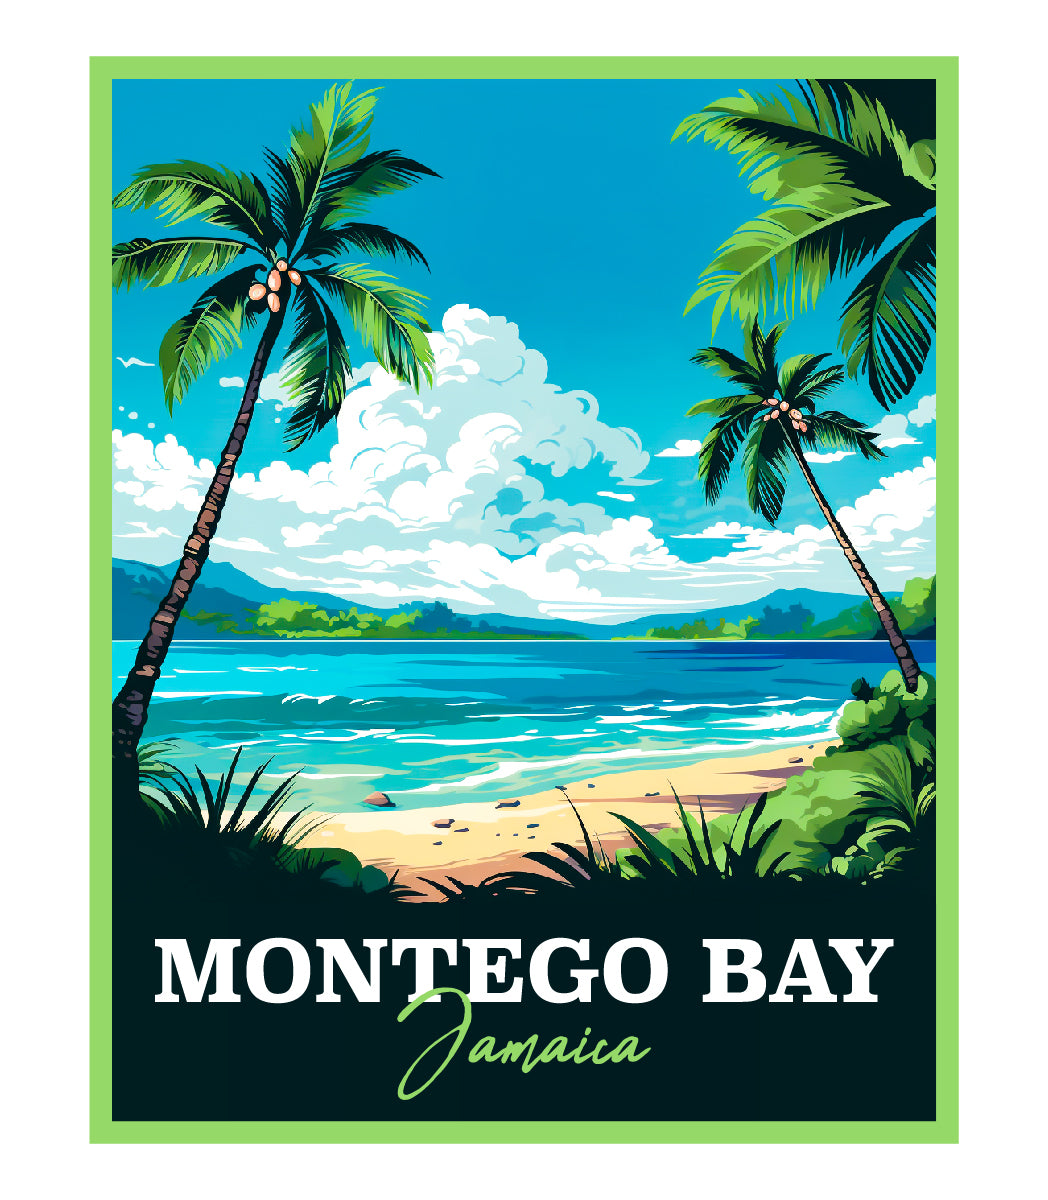 Exclusive Montego Bay Jamaica Collectible - Vintage Travel Poster Art